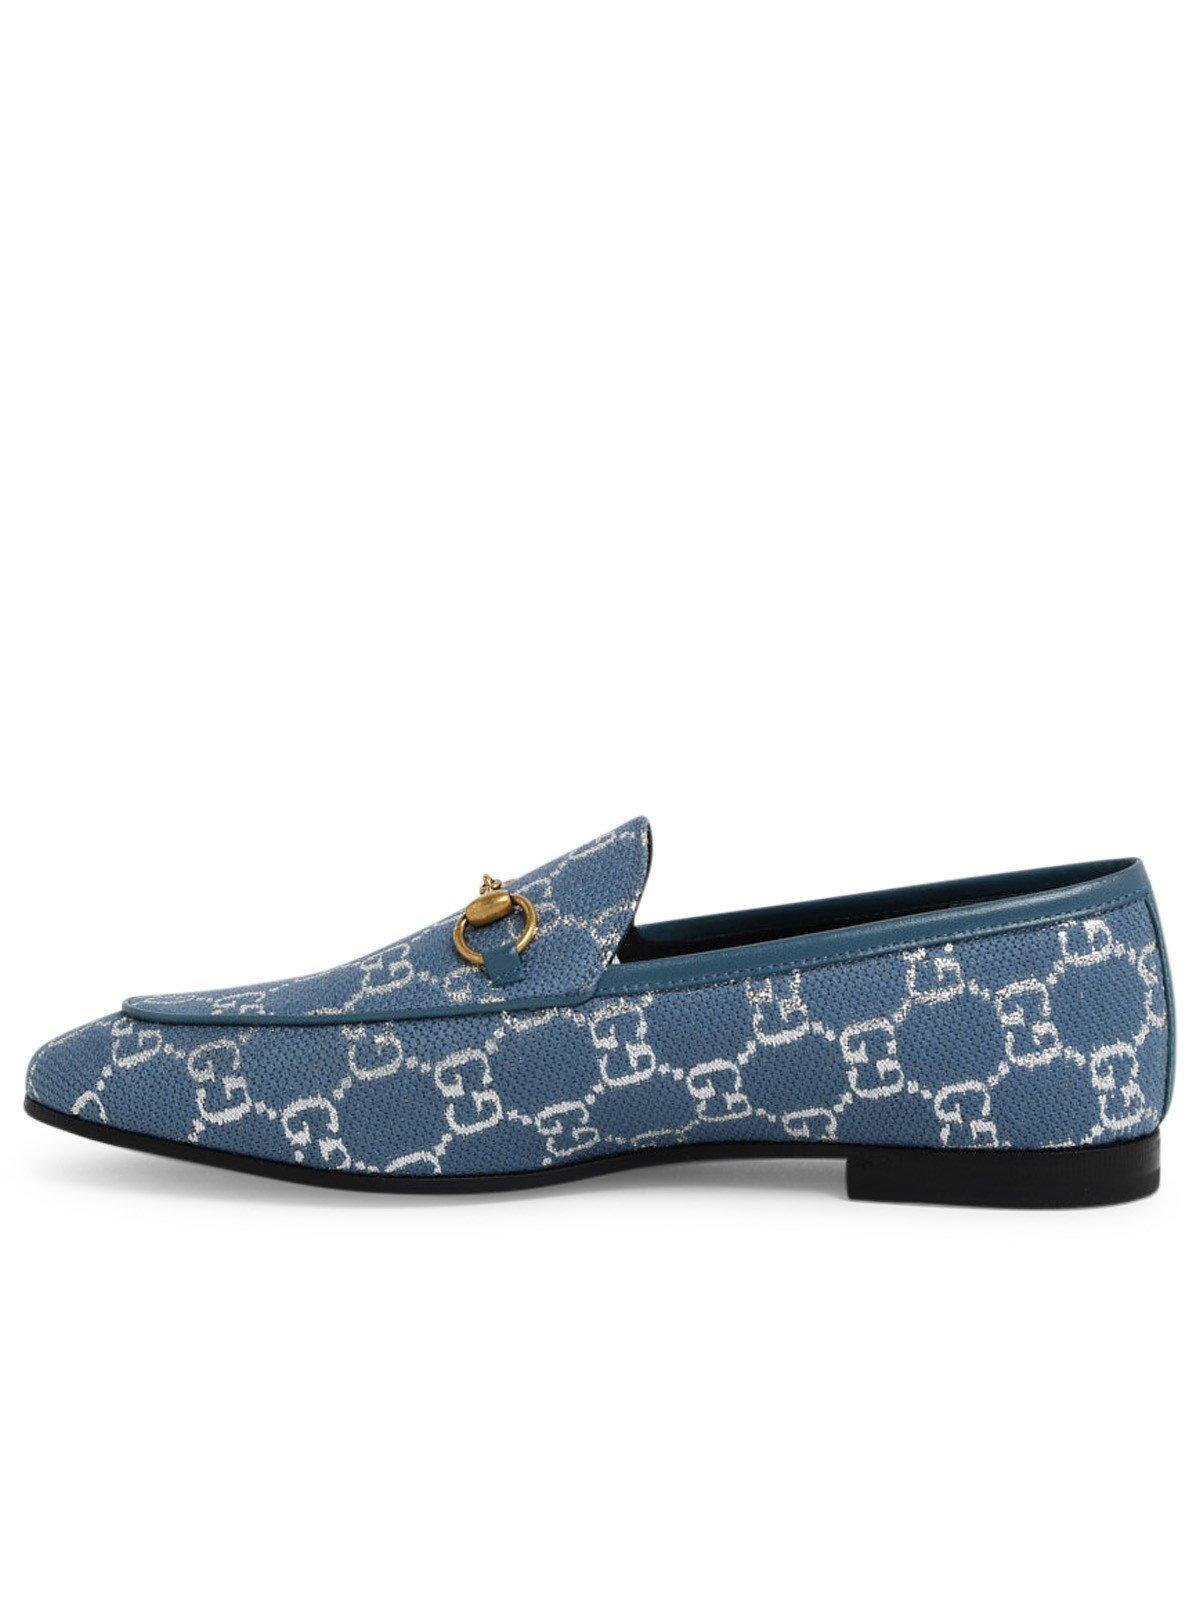 Gucci Leather Jordaan Loafer in Denim (Blue) | Lyst